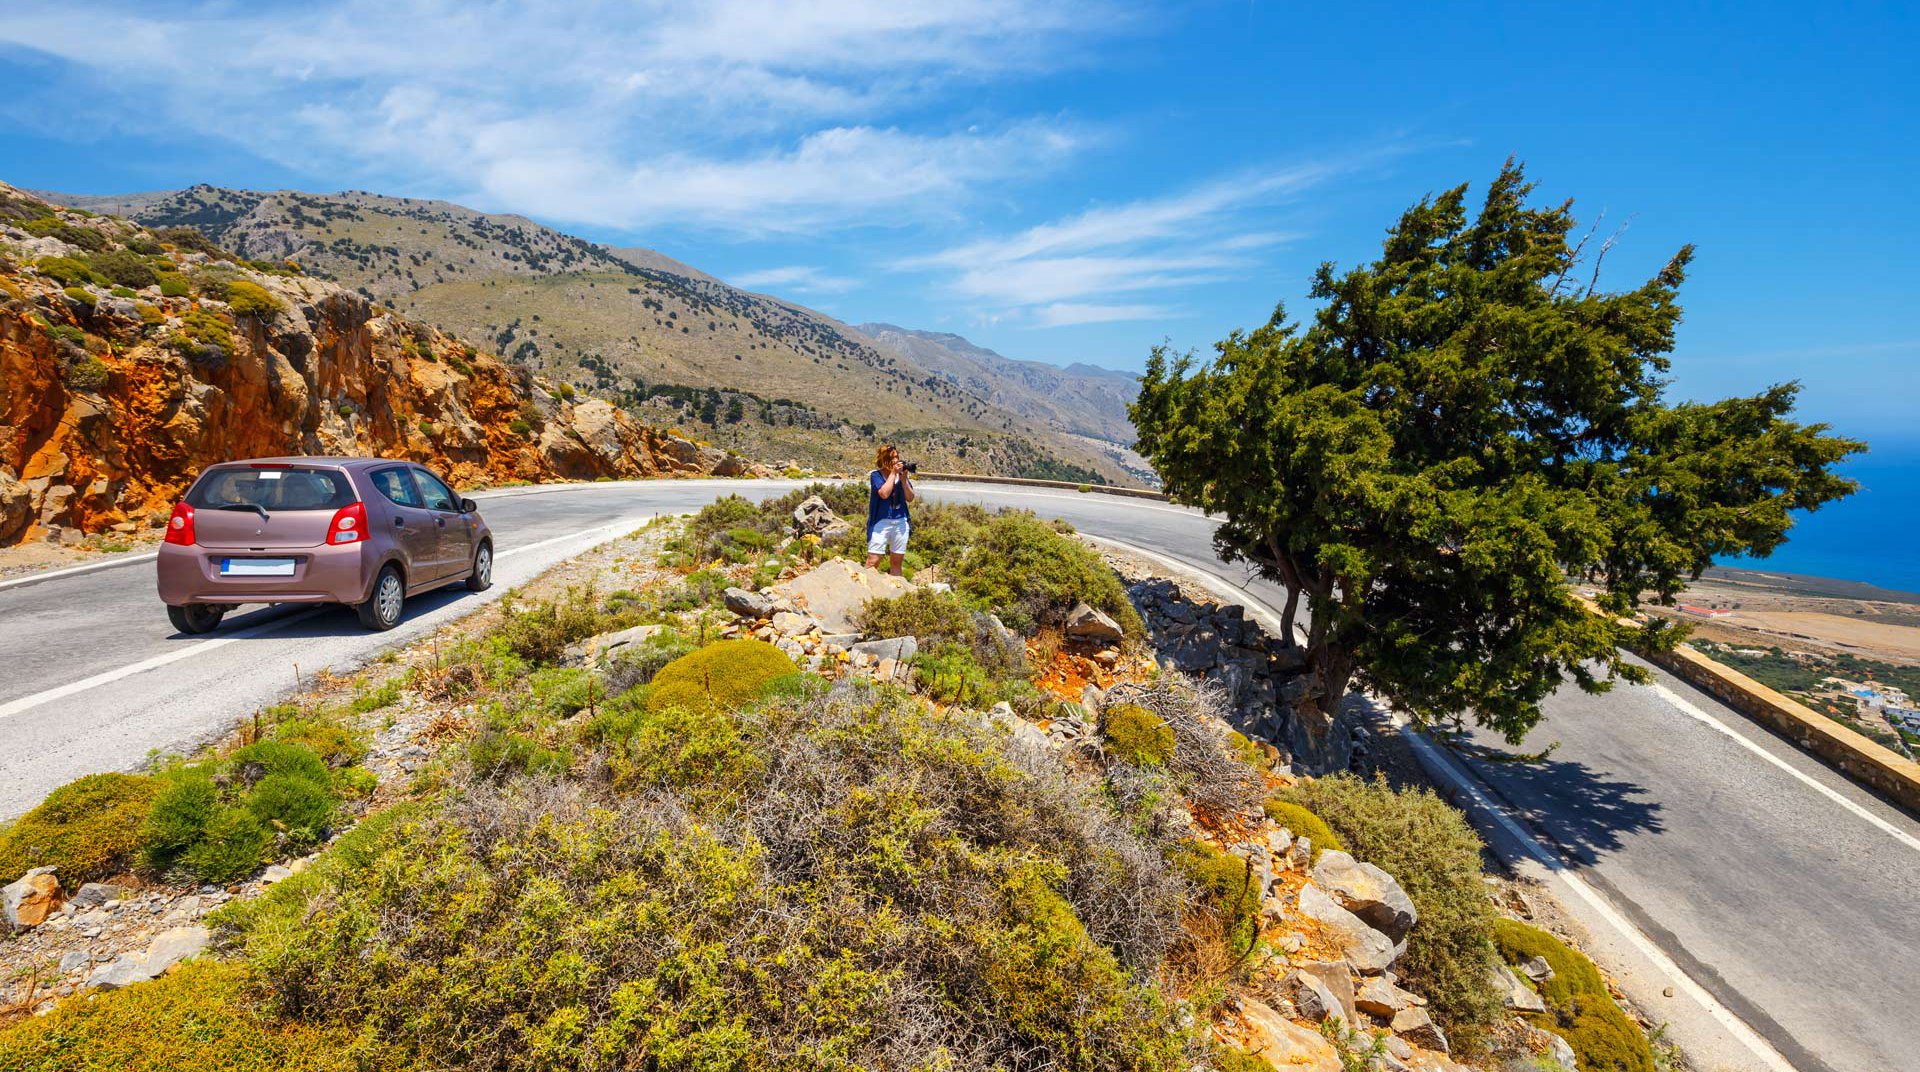 Rent a car and explore Crete